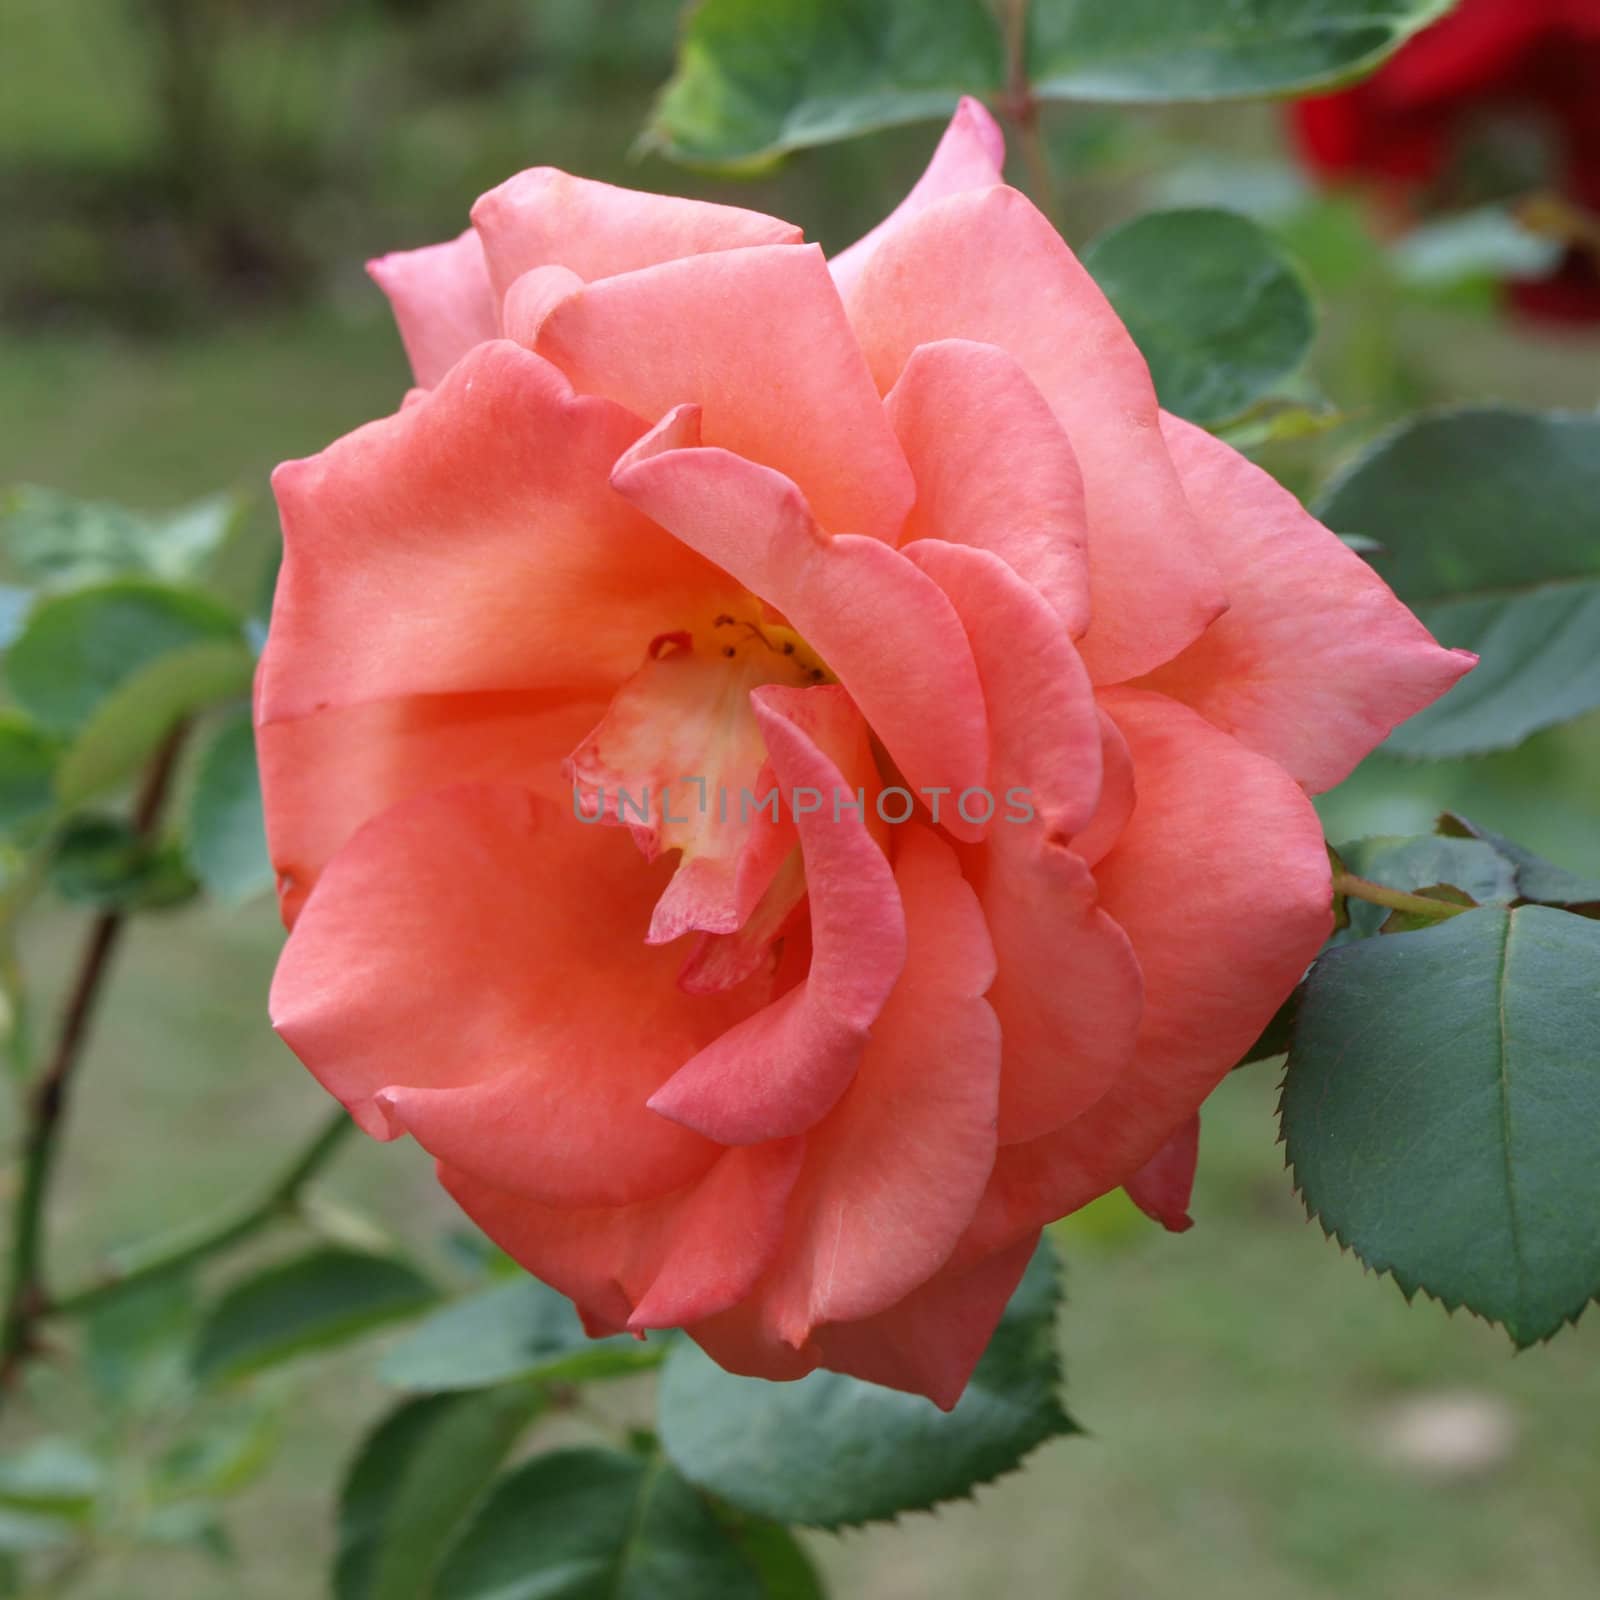 Roses on a bush in a garden by jakgree